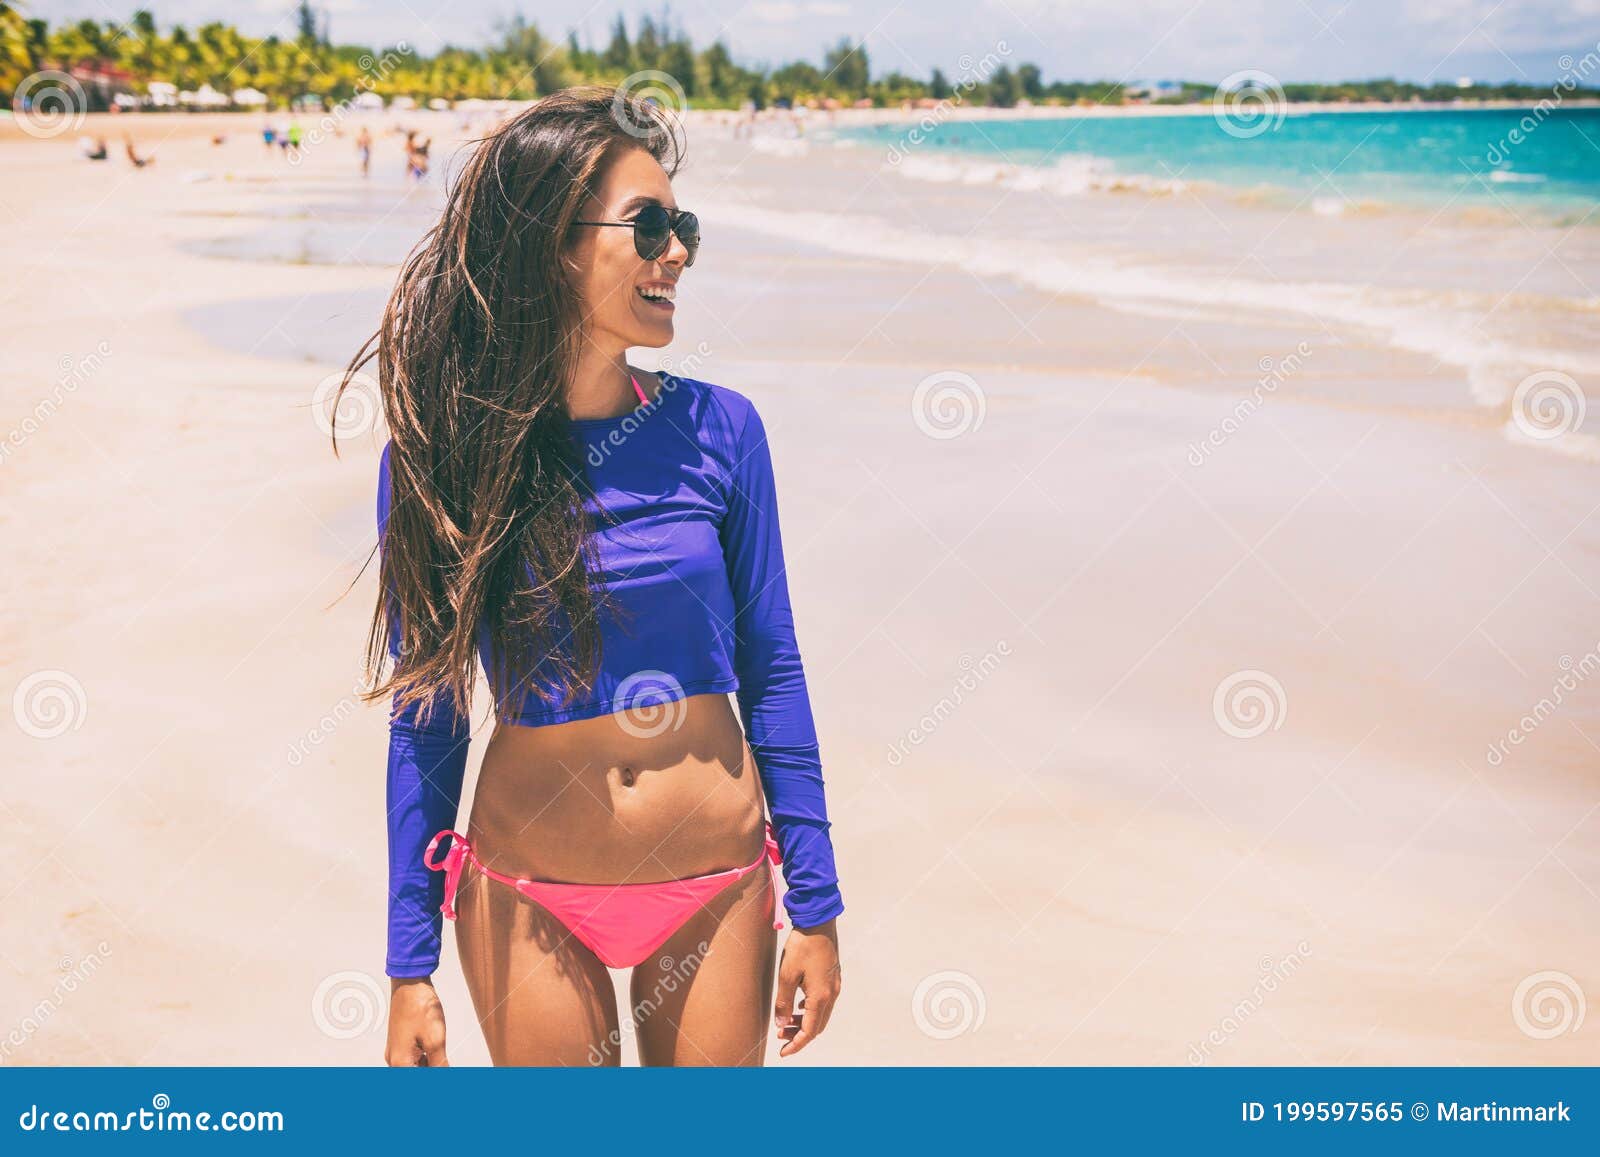 https://thumbs.dreamstime.com/z/beach-rashguard-bikini-woman-wearing-swim-shirt-rash-guard-sun-protection-against-solar-uv-rays-beach-rashguard-bikini-woman-199597565.jpg